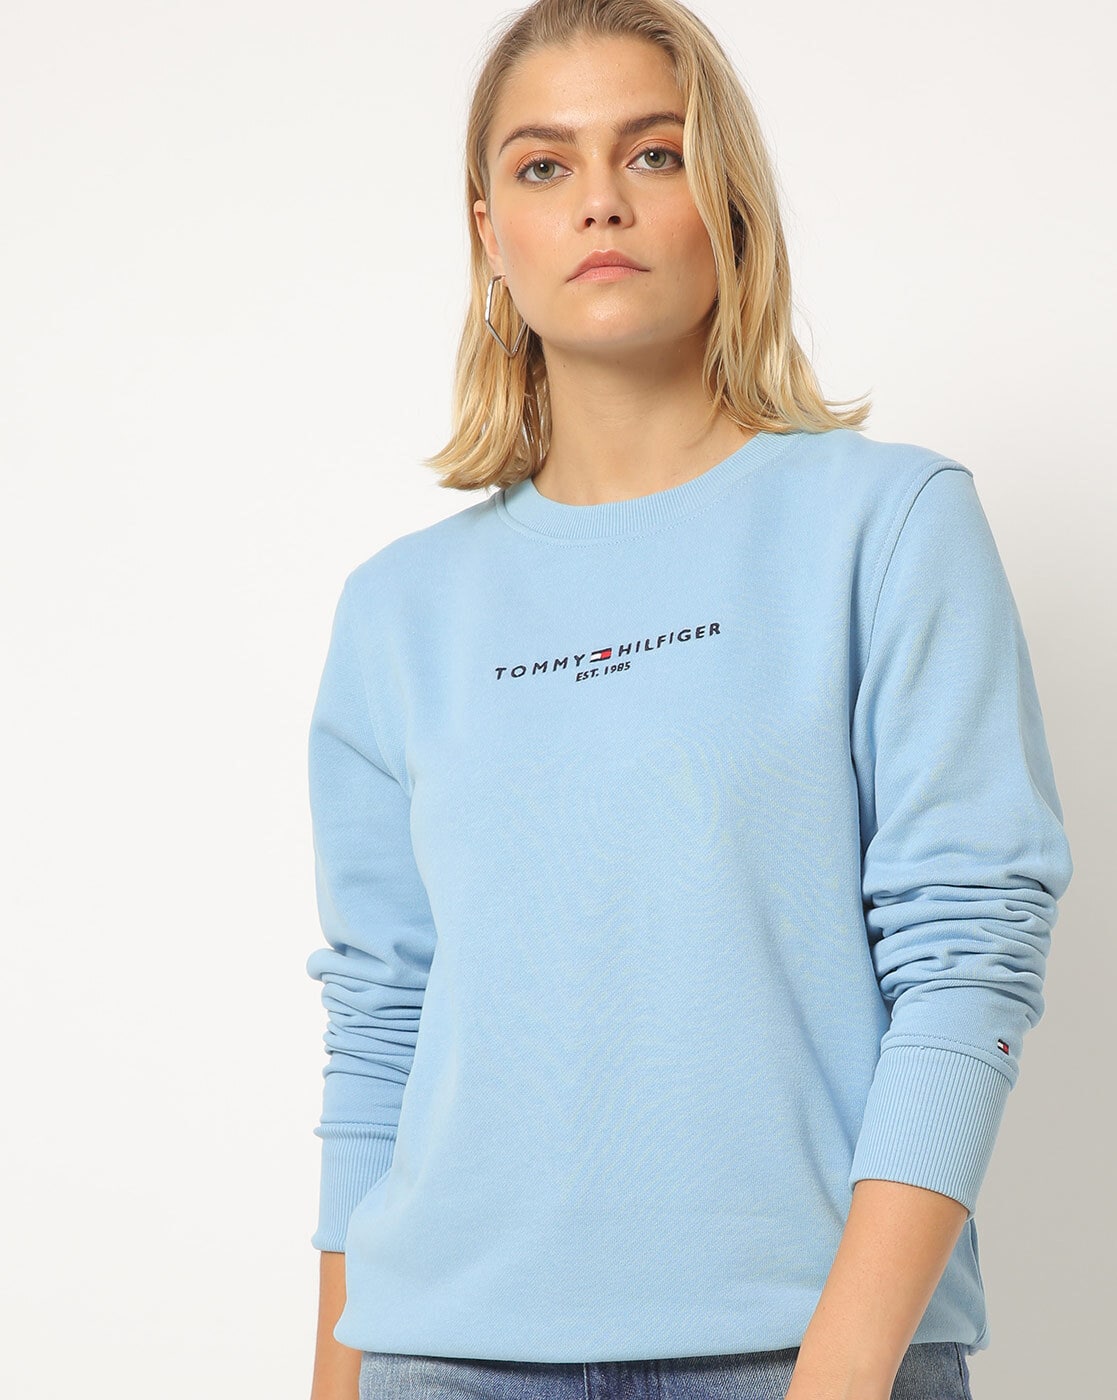 Tommy Hilfiger Sweatshirts for Women